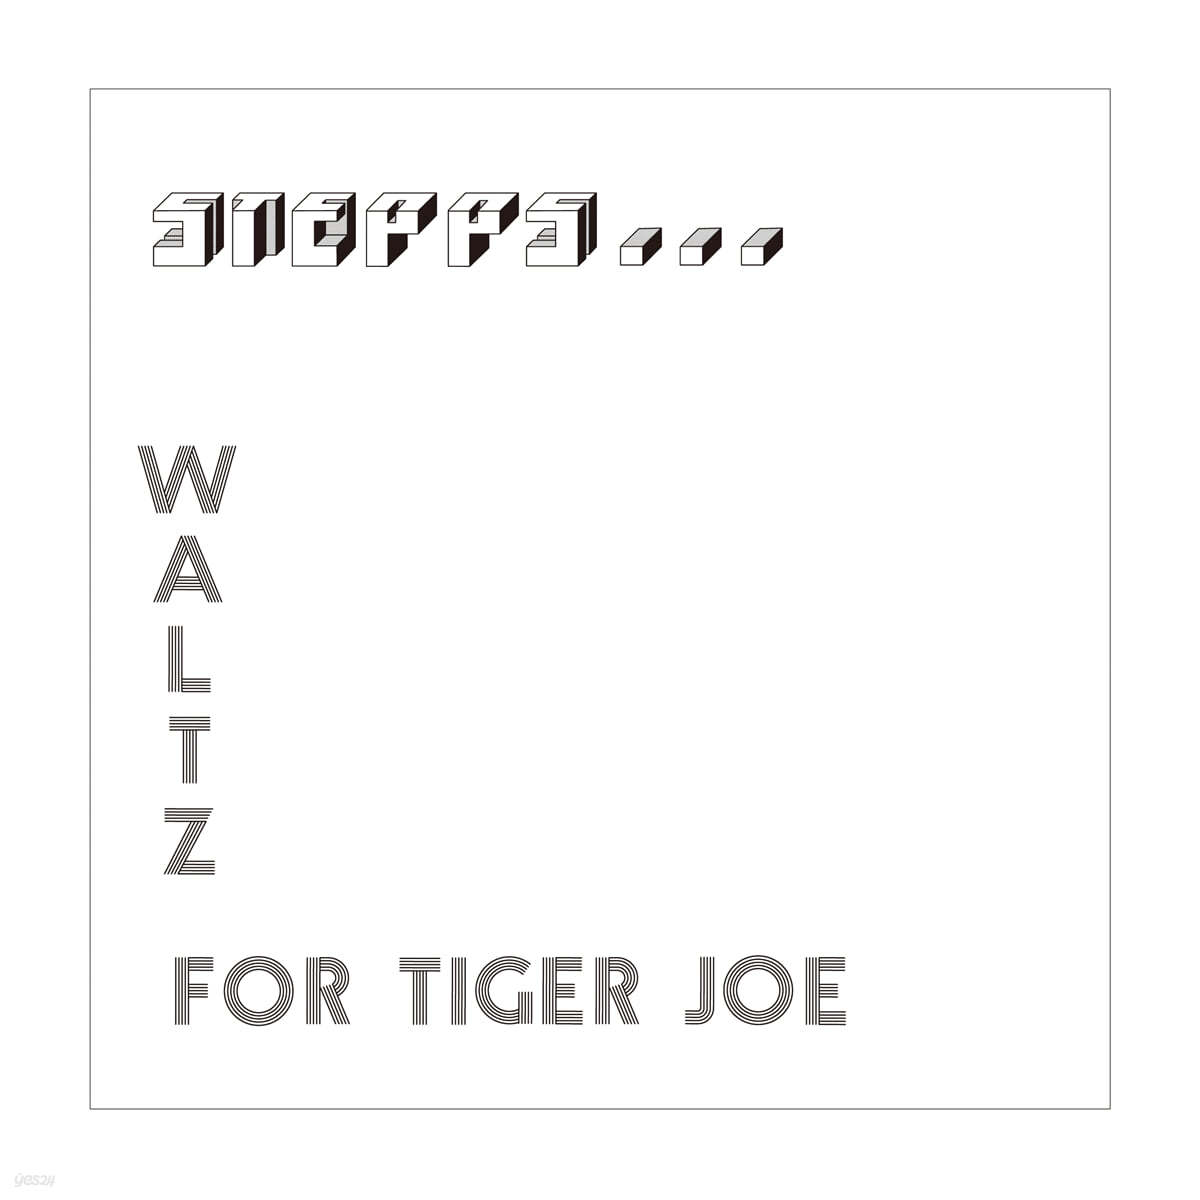 STEPPS (스텝스) - Waltz For Tiger Joe [화이트 컬러 2LP]